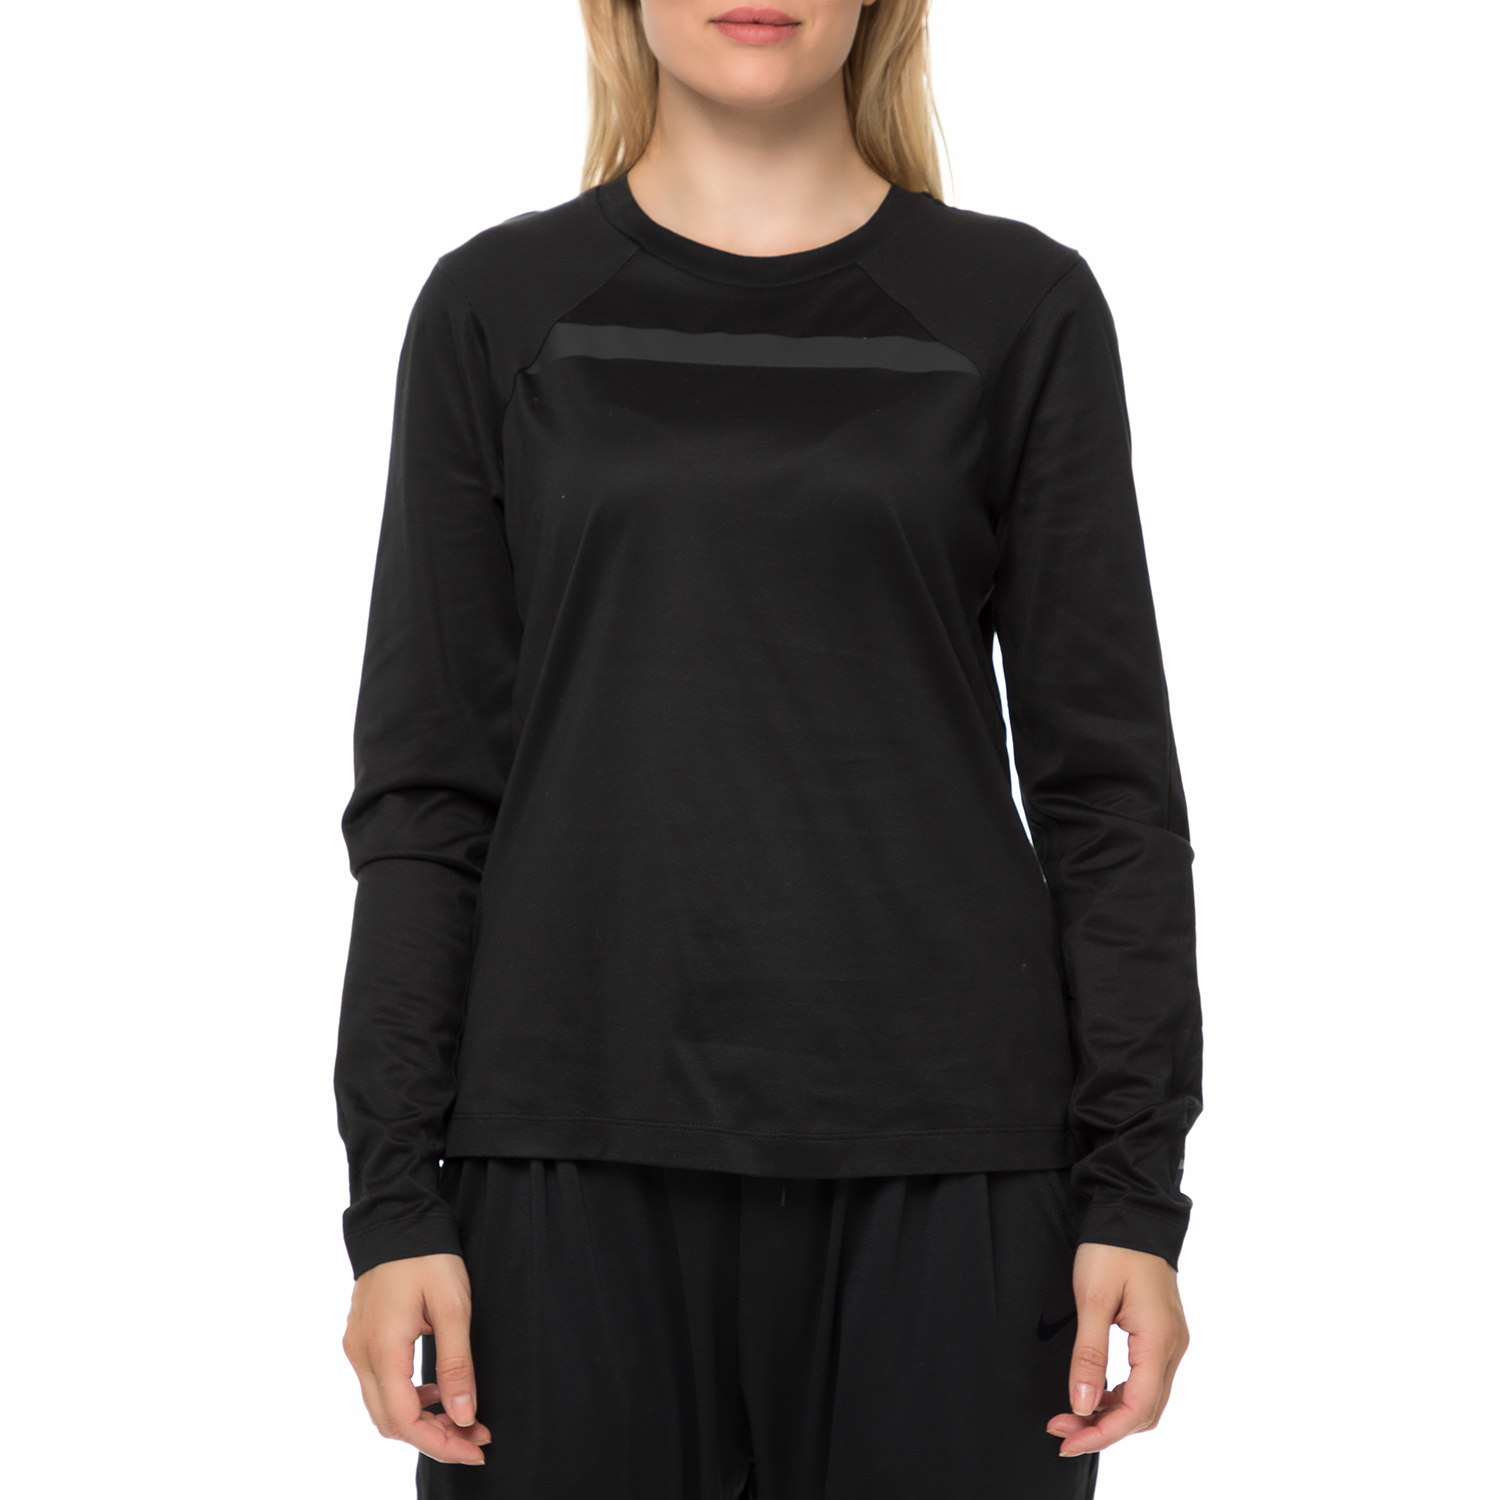 NIKE - Γυναικεία μακρυμάνικη μπλούζα NIKE NSW TOP LS BND GX μαύρη Γυναικεία/Ρούχα/Αθλητικά/Φούτερ-Μακρυμάνικα